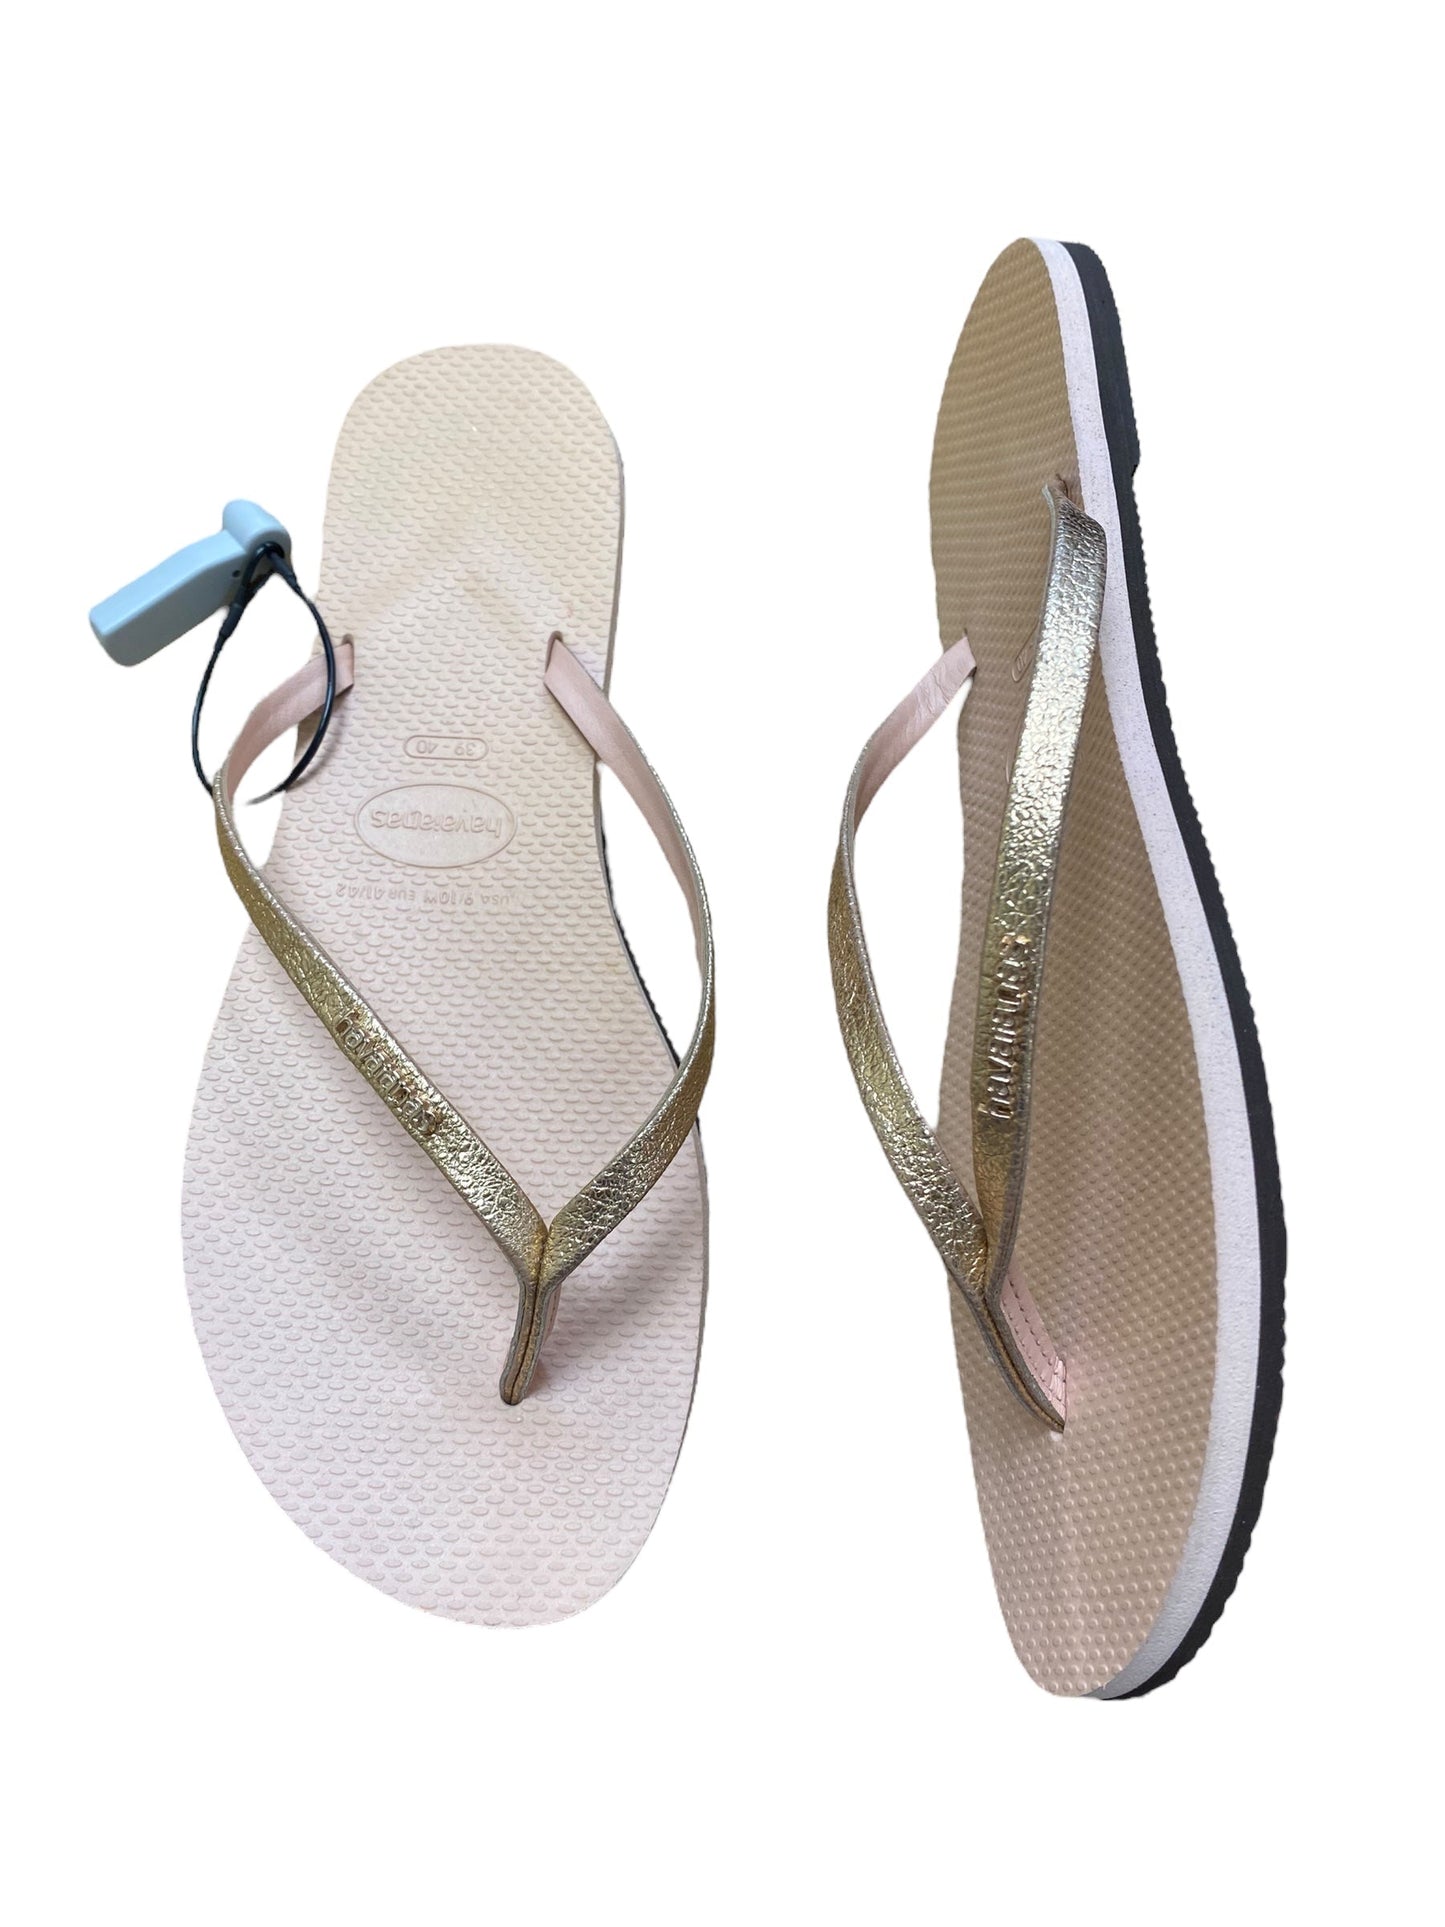 Sandals Flip Flops By Havaianas  Size: 9